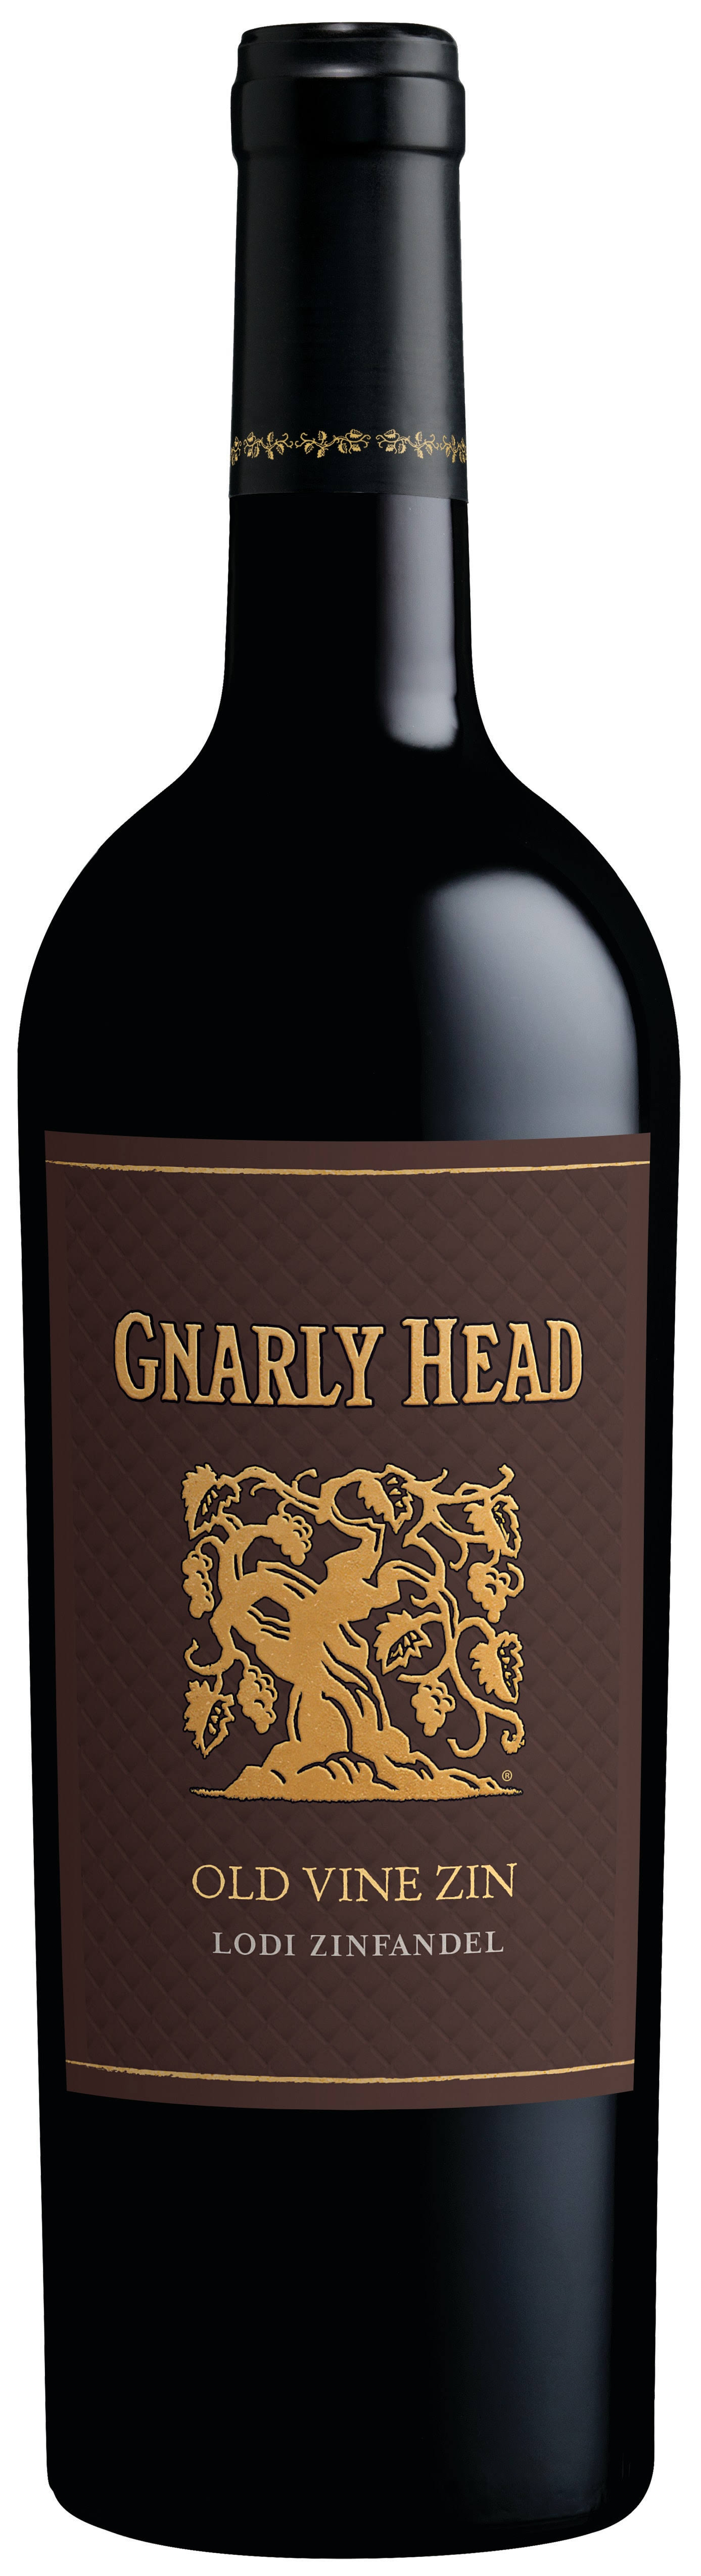 Gnarly Head Old Vine Zin, Lodi Zinfandel, 2018 - 750 ml